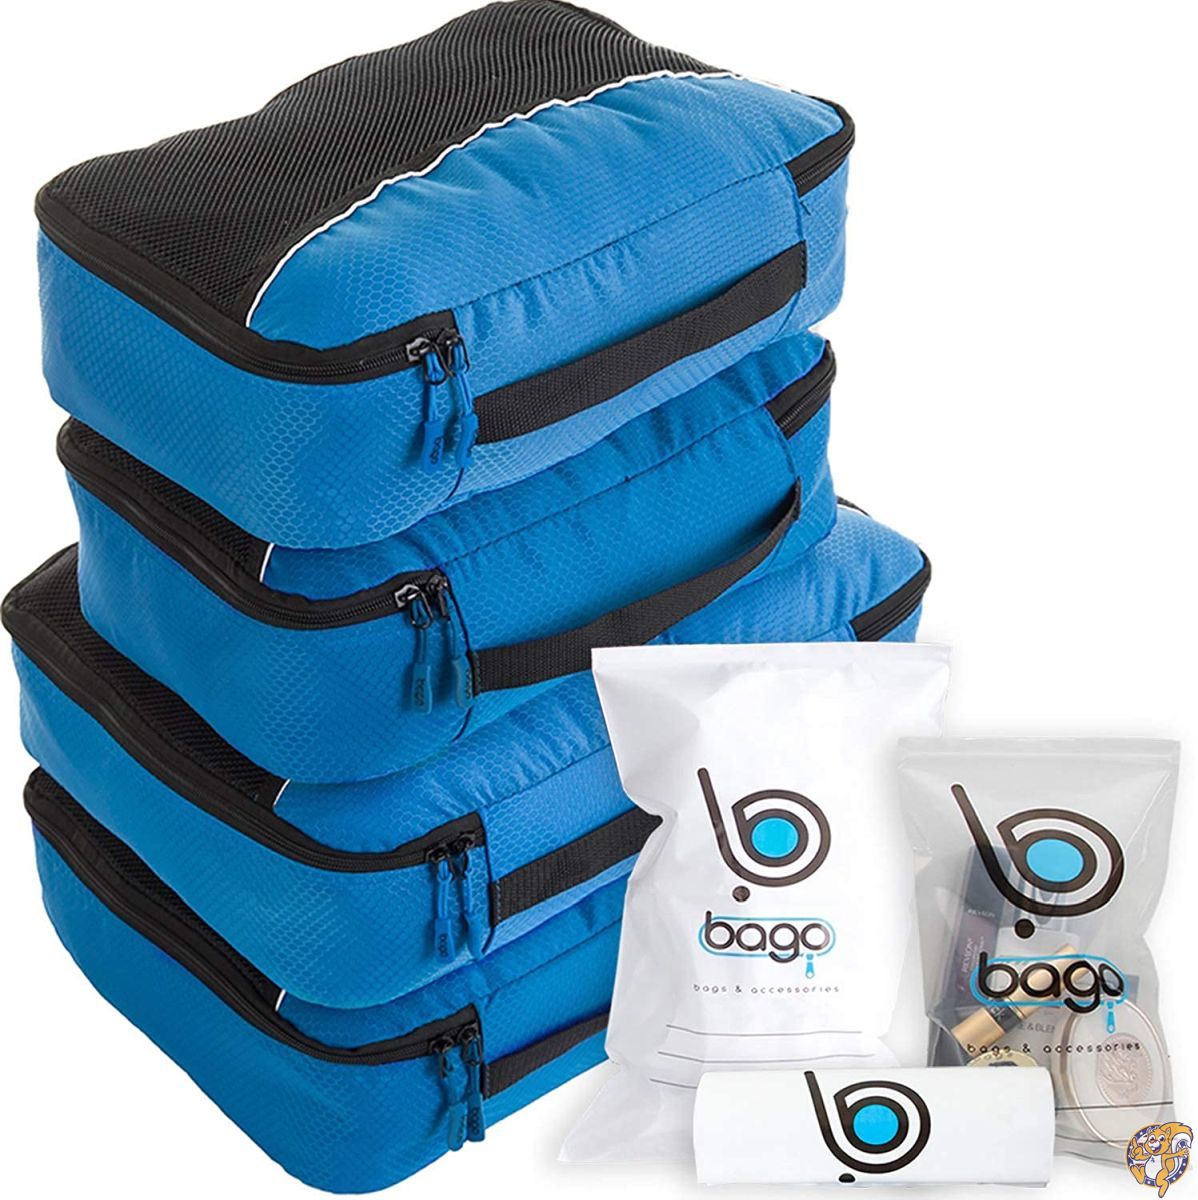 Bago パッキングキューブ - トラベル オーガナイザー ラゲージ&スーツケース用 4個セット (並行輸入) 送料無料